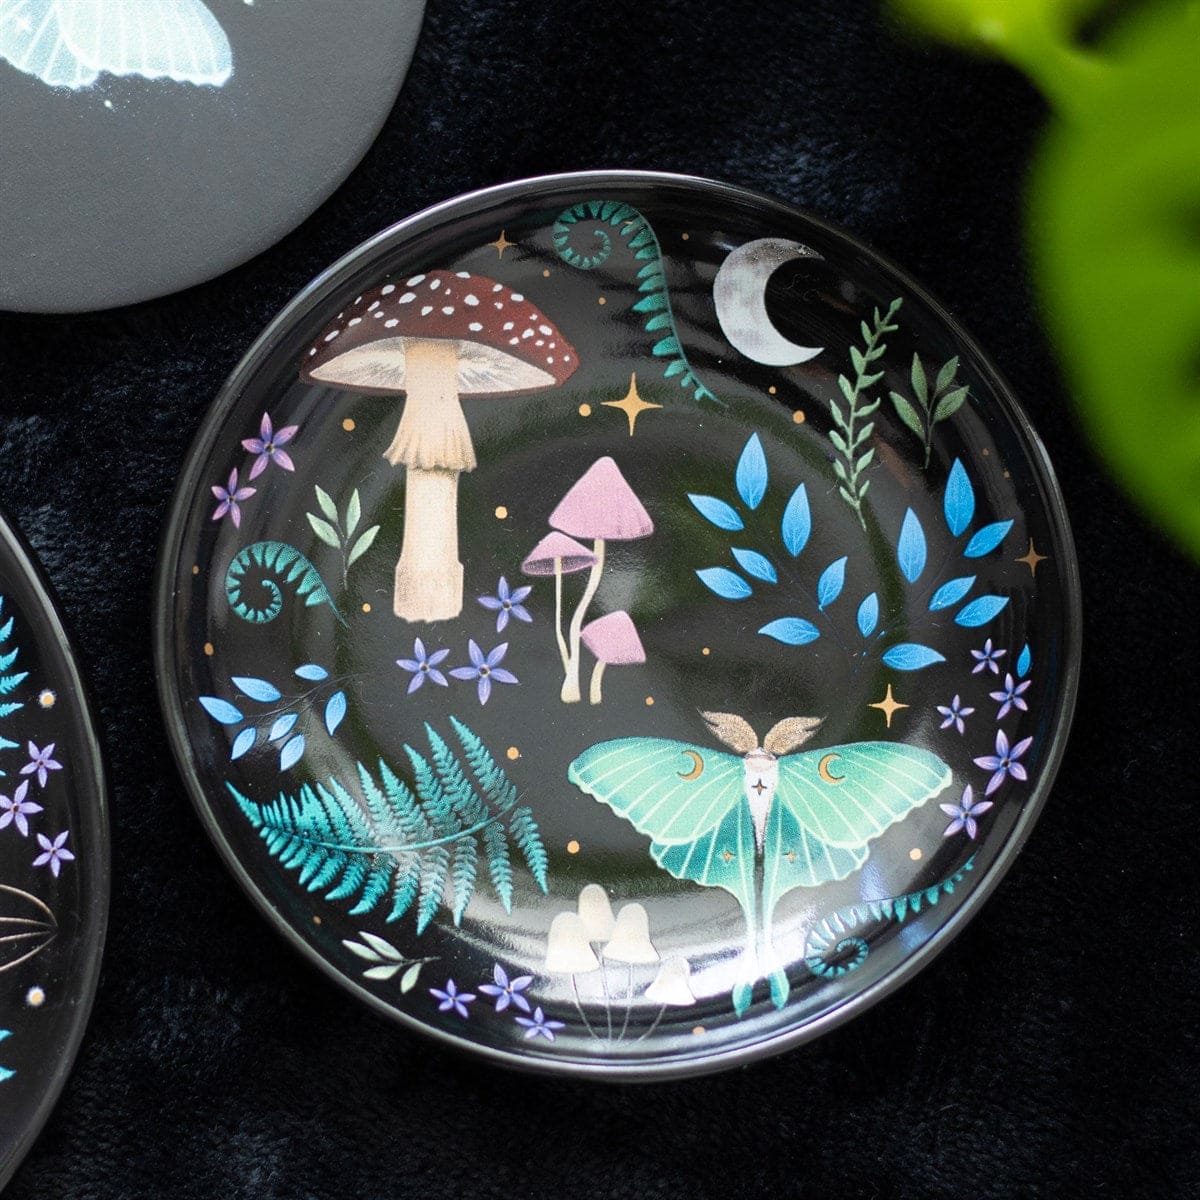 Dark Forest Print Trinket Jewelry Round Dish - Jewellery Dish by Spirit of equinox